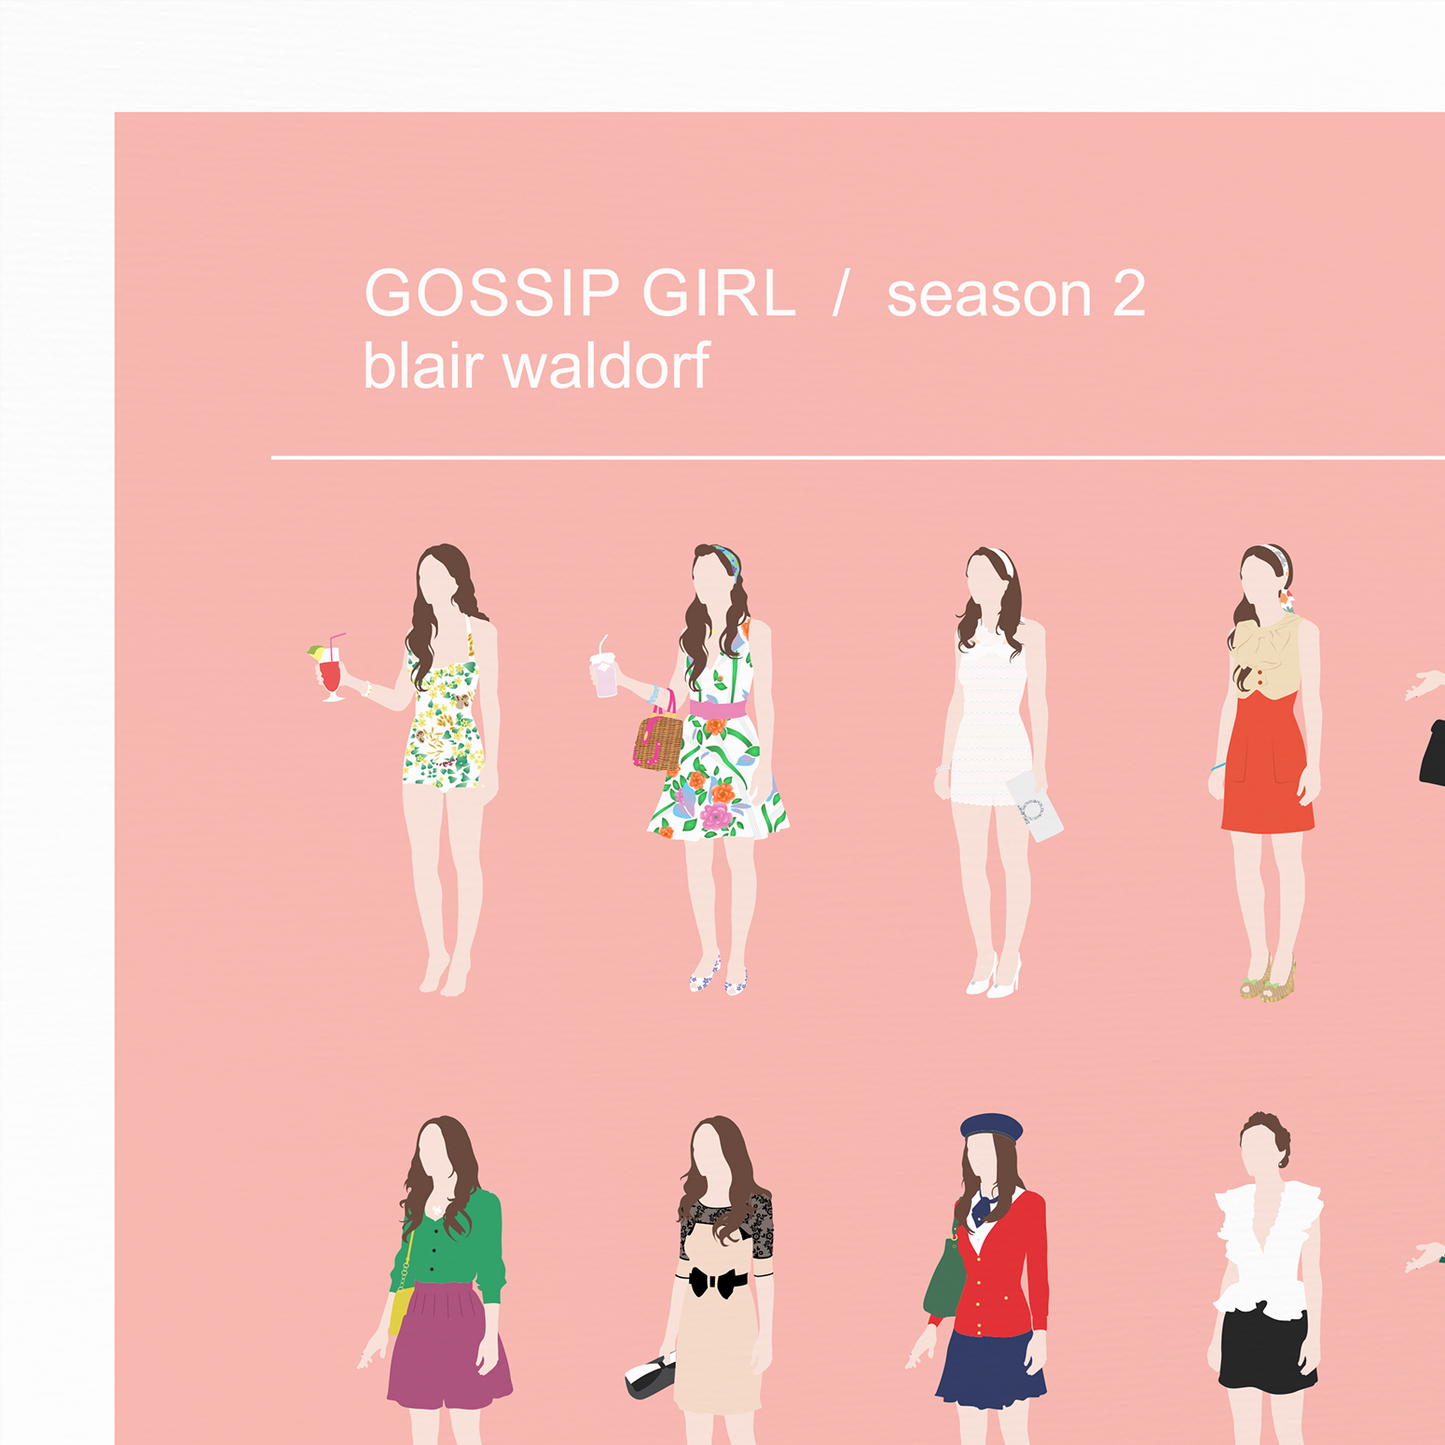 Gossip Girl Blair Waldorf Set Of 4 Posters